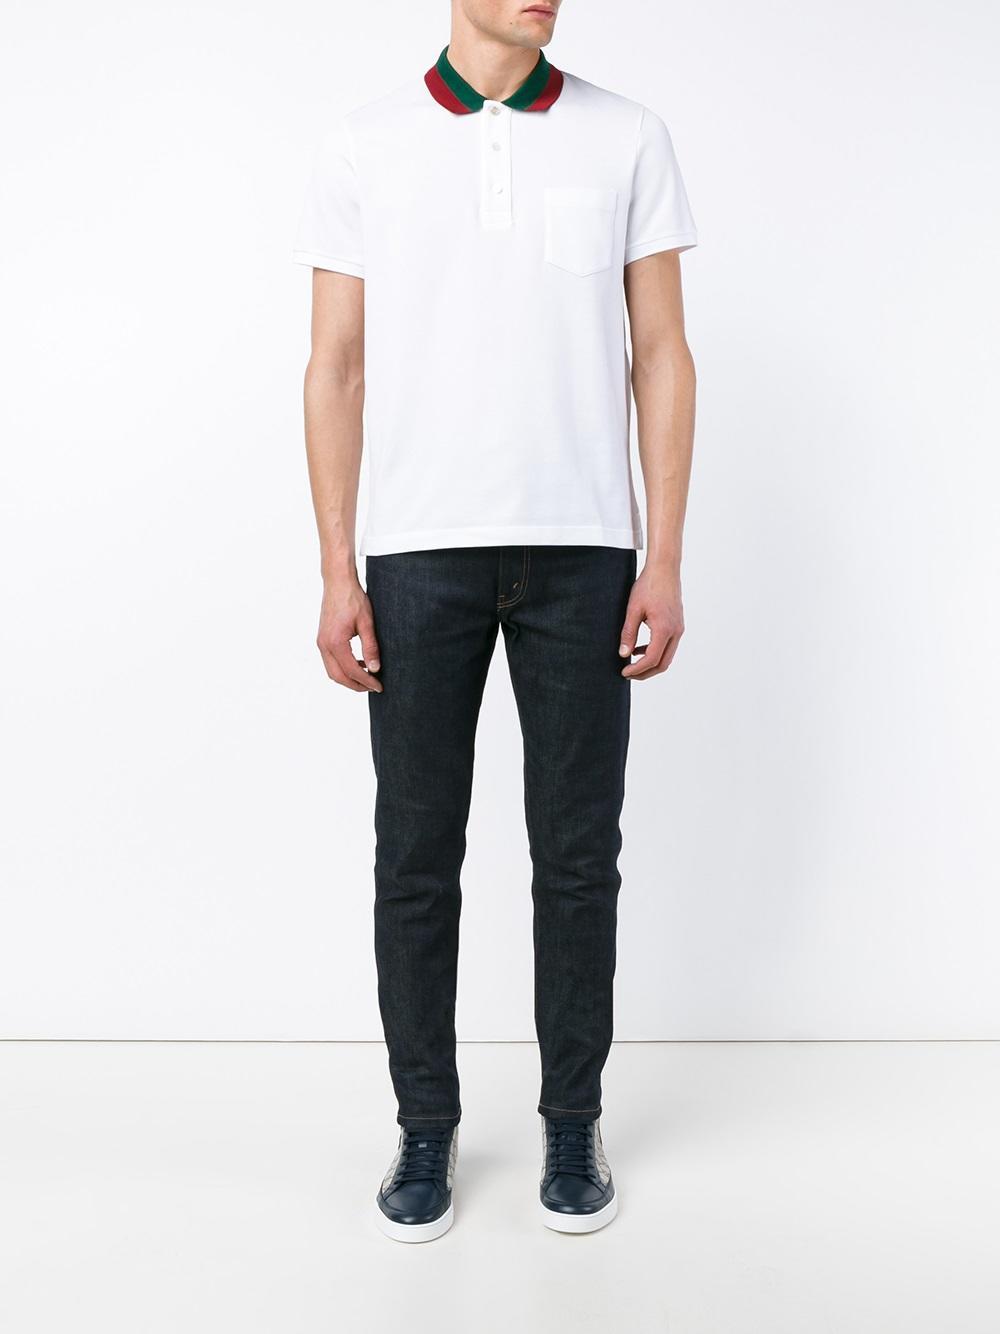 Gucci - Web Collar Polo Shirt - Men - Cotton/spandex/elastane - M in ...